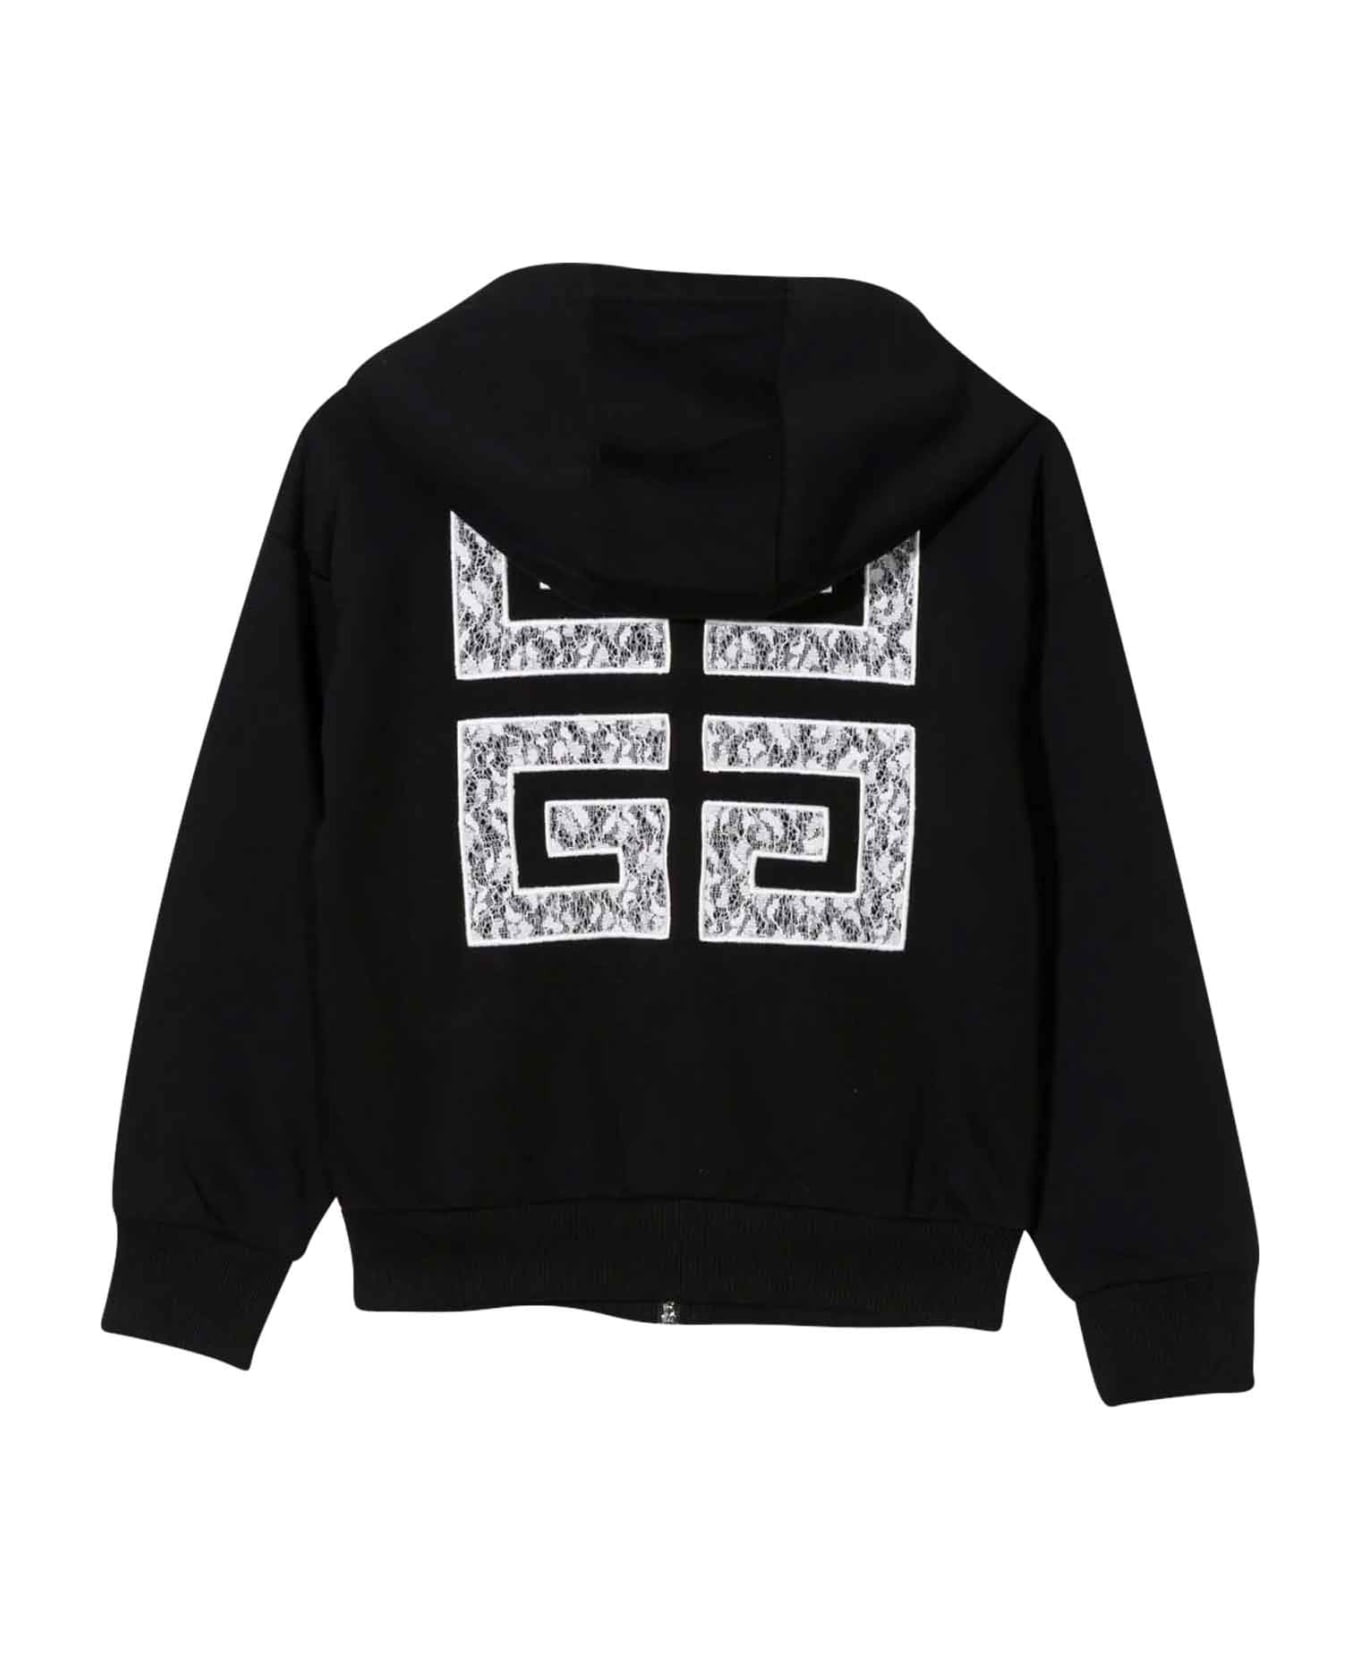 Givenchy Black Sweatshirt With Print , Zip And Hood